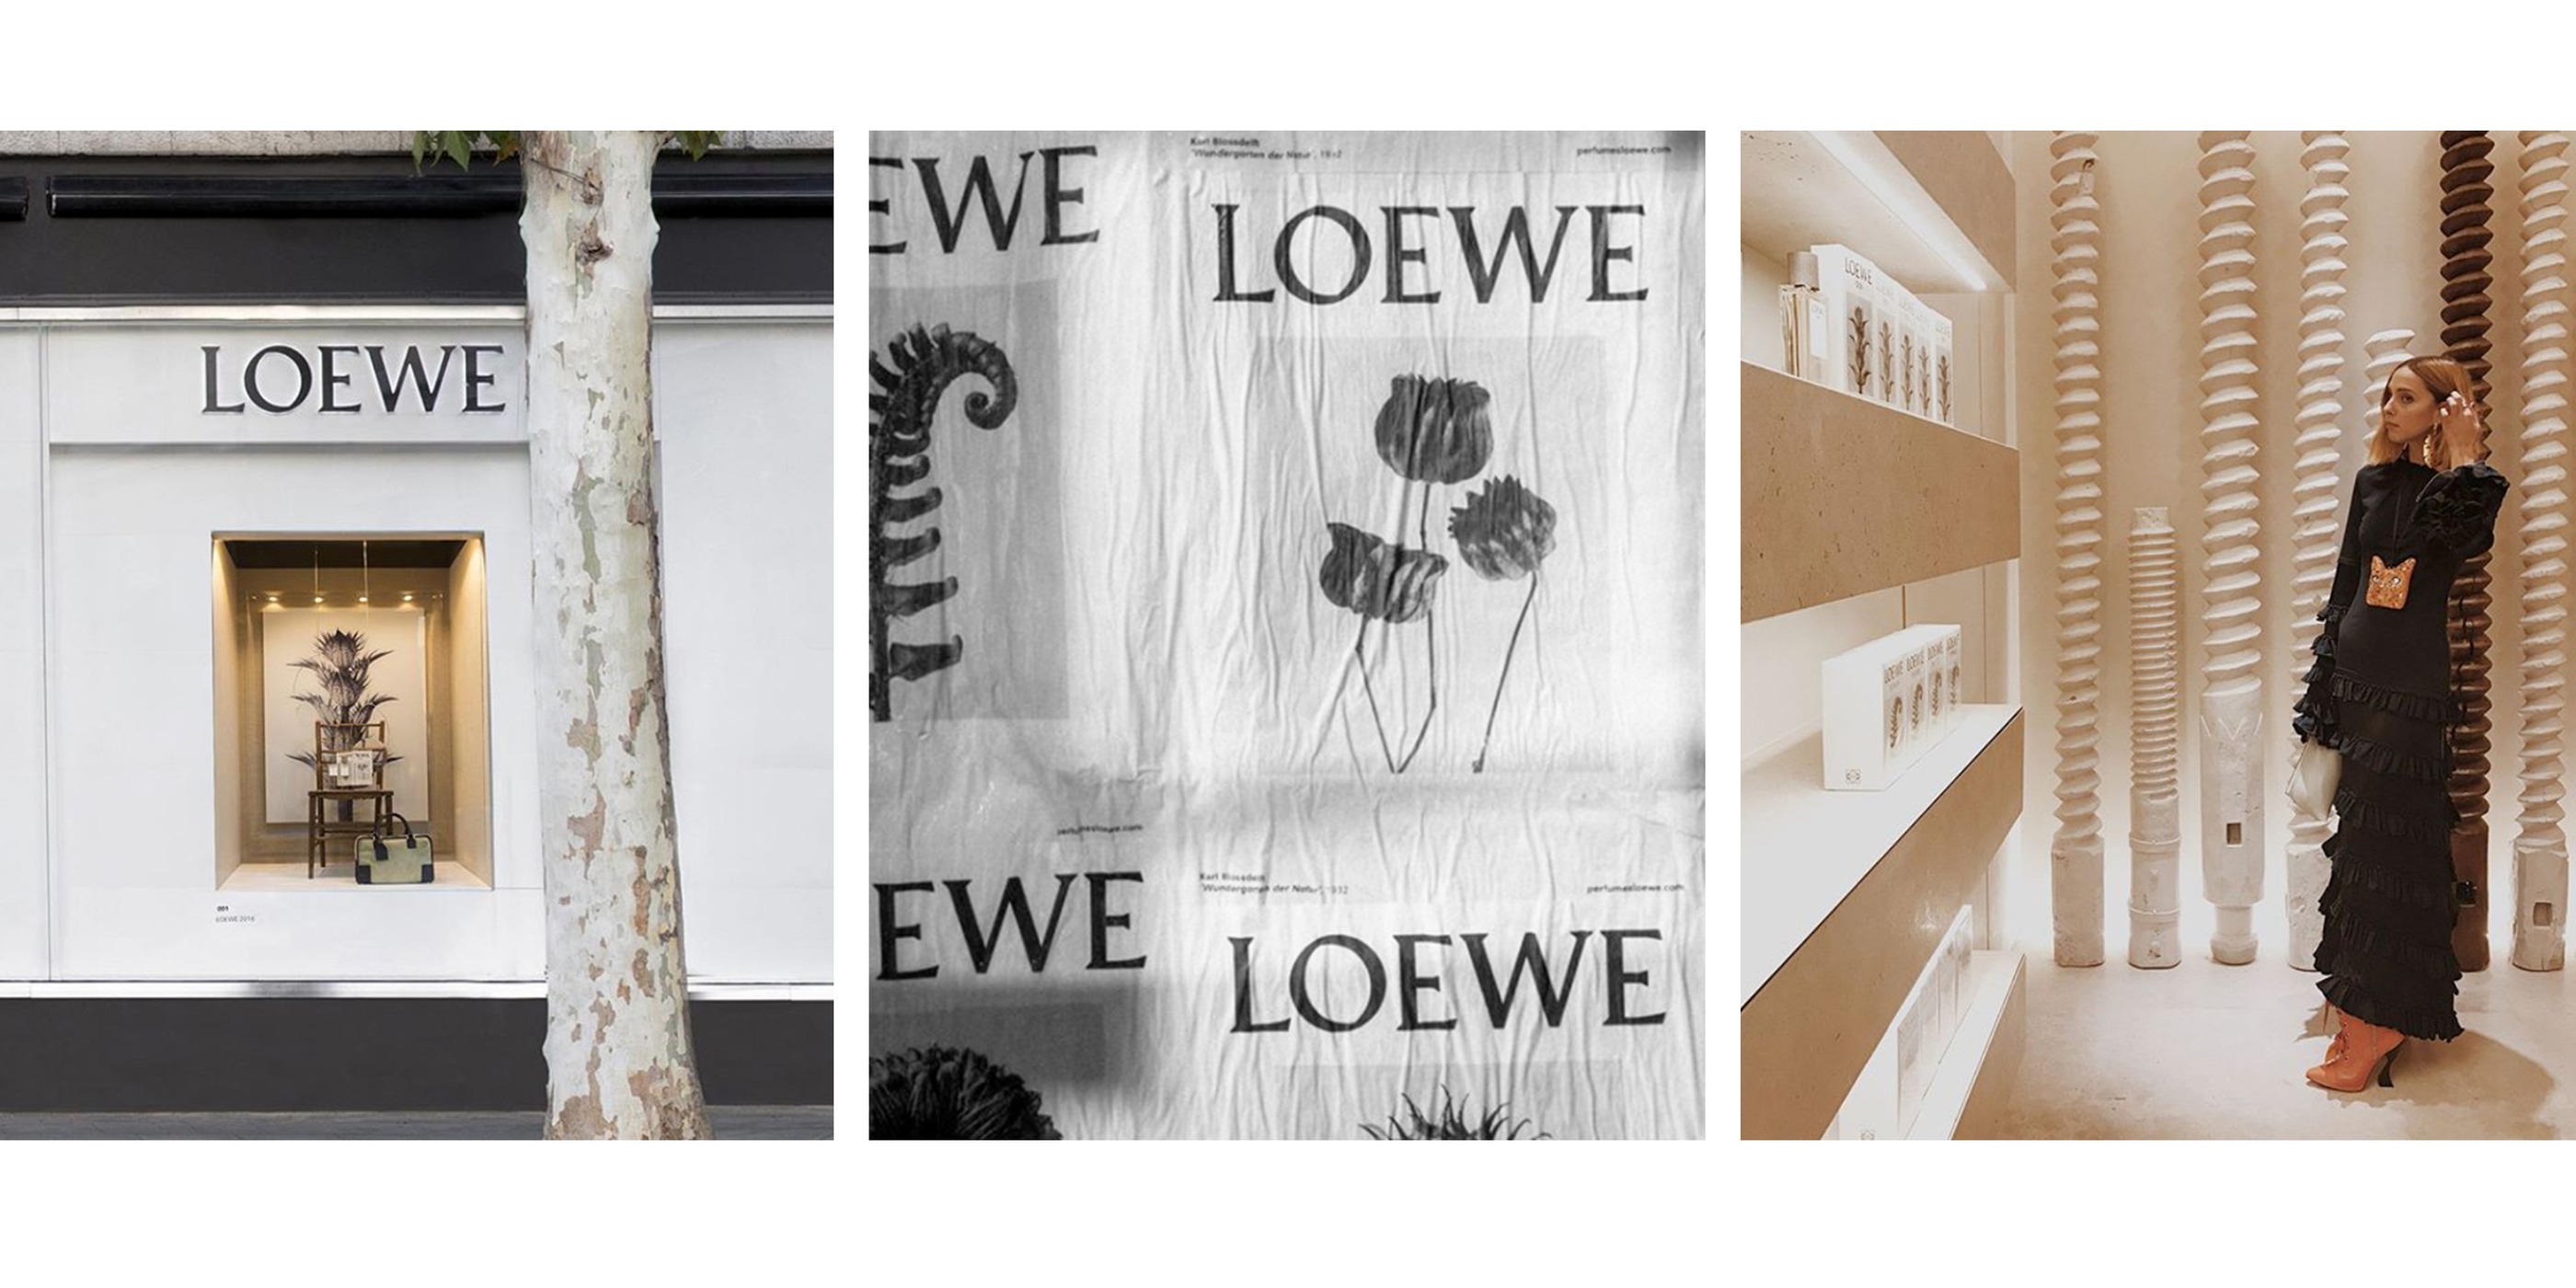 Art direction for Loewe fragrance